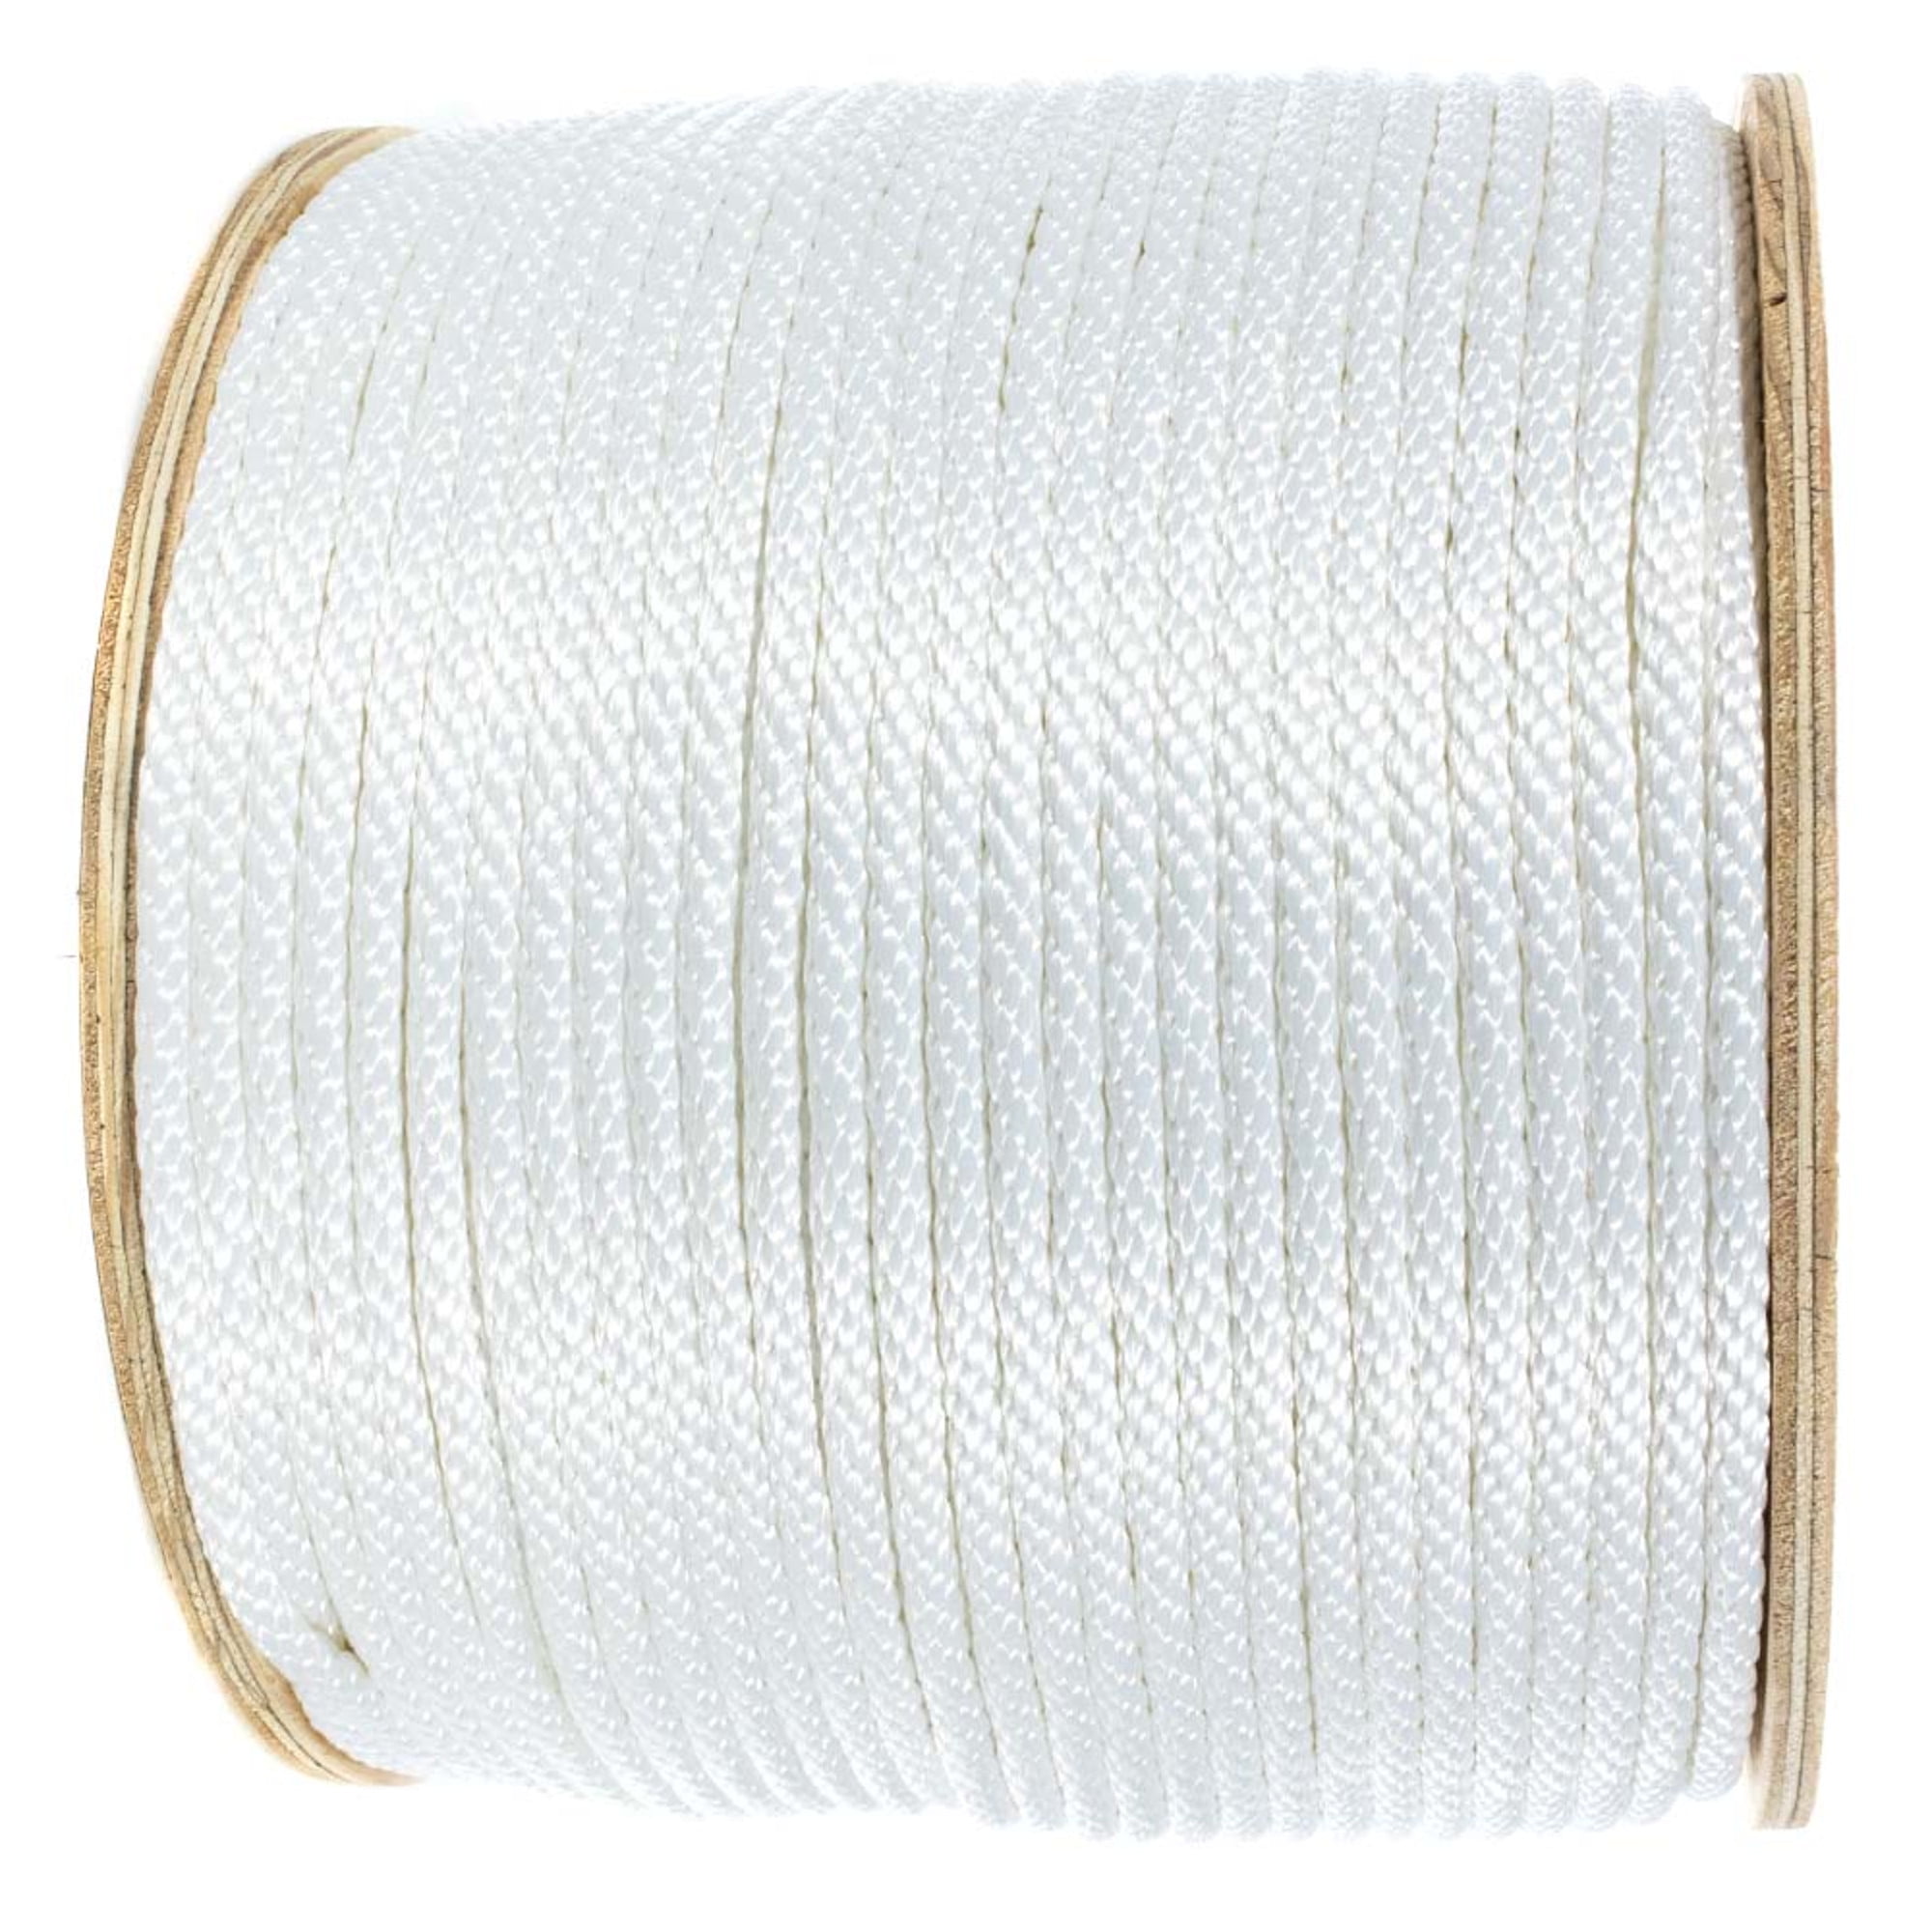 Golberg Solid Braid Black or White Nylon Rope 1/8-inch, 3/16-inch,  1/4-inch, 5/16-inch, 3/8-inch, 1/2-inch - Various Lengths